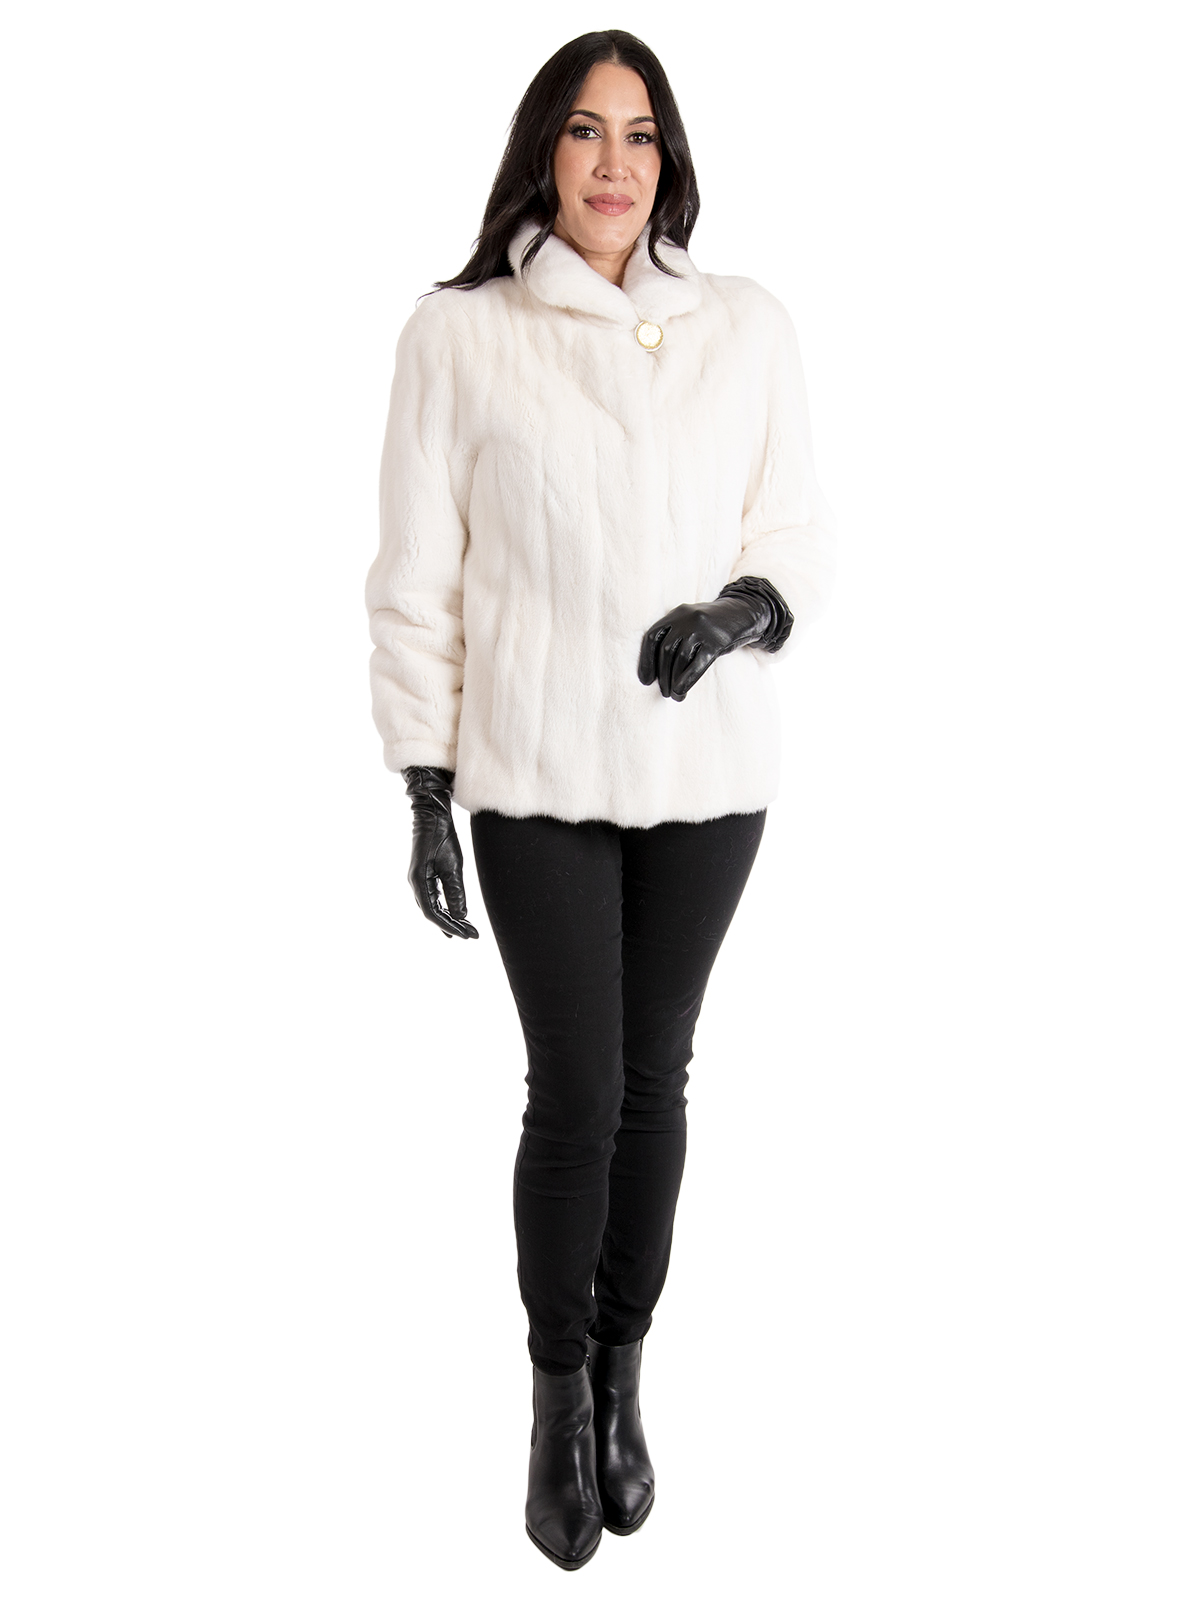 Women's White Mink Fur Jacket